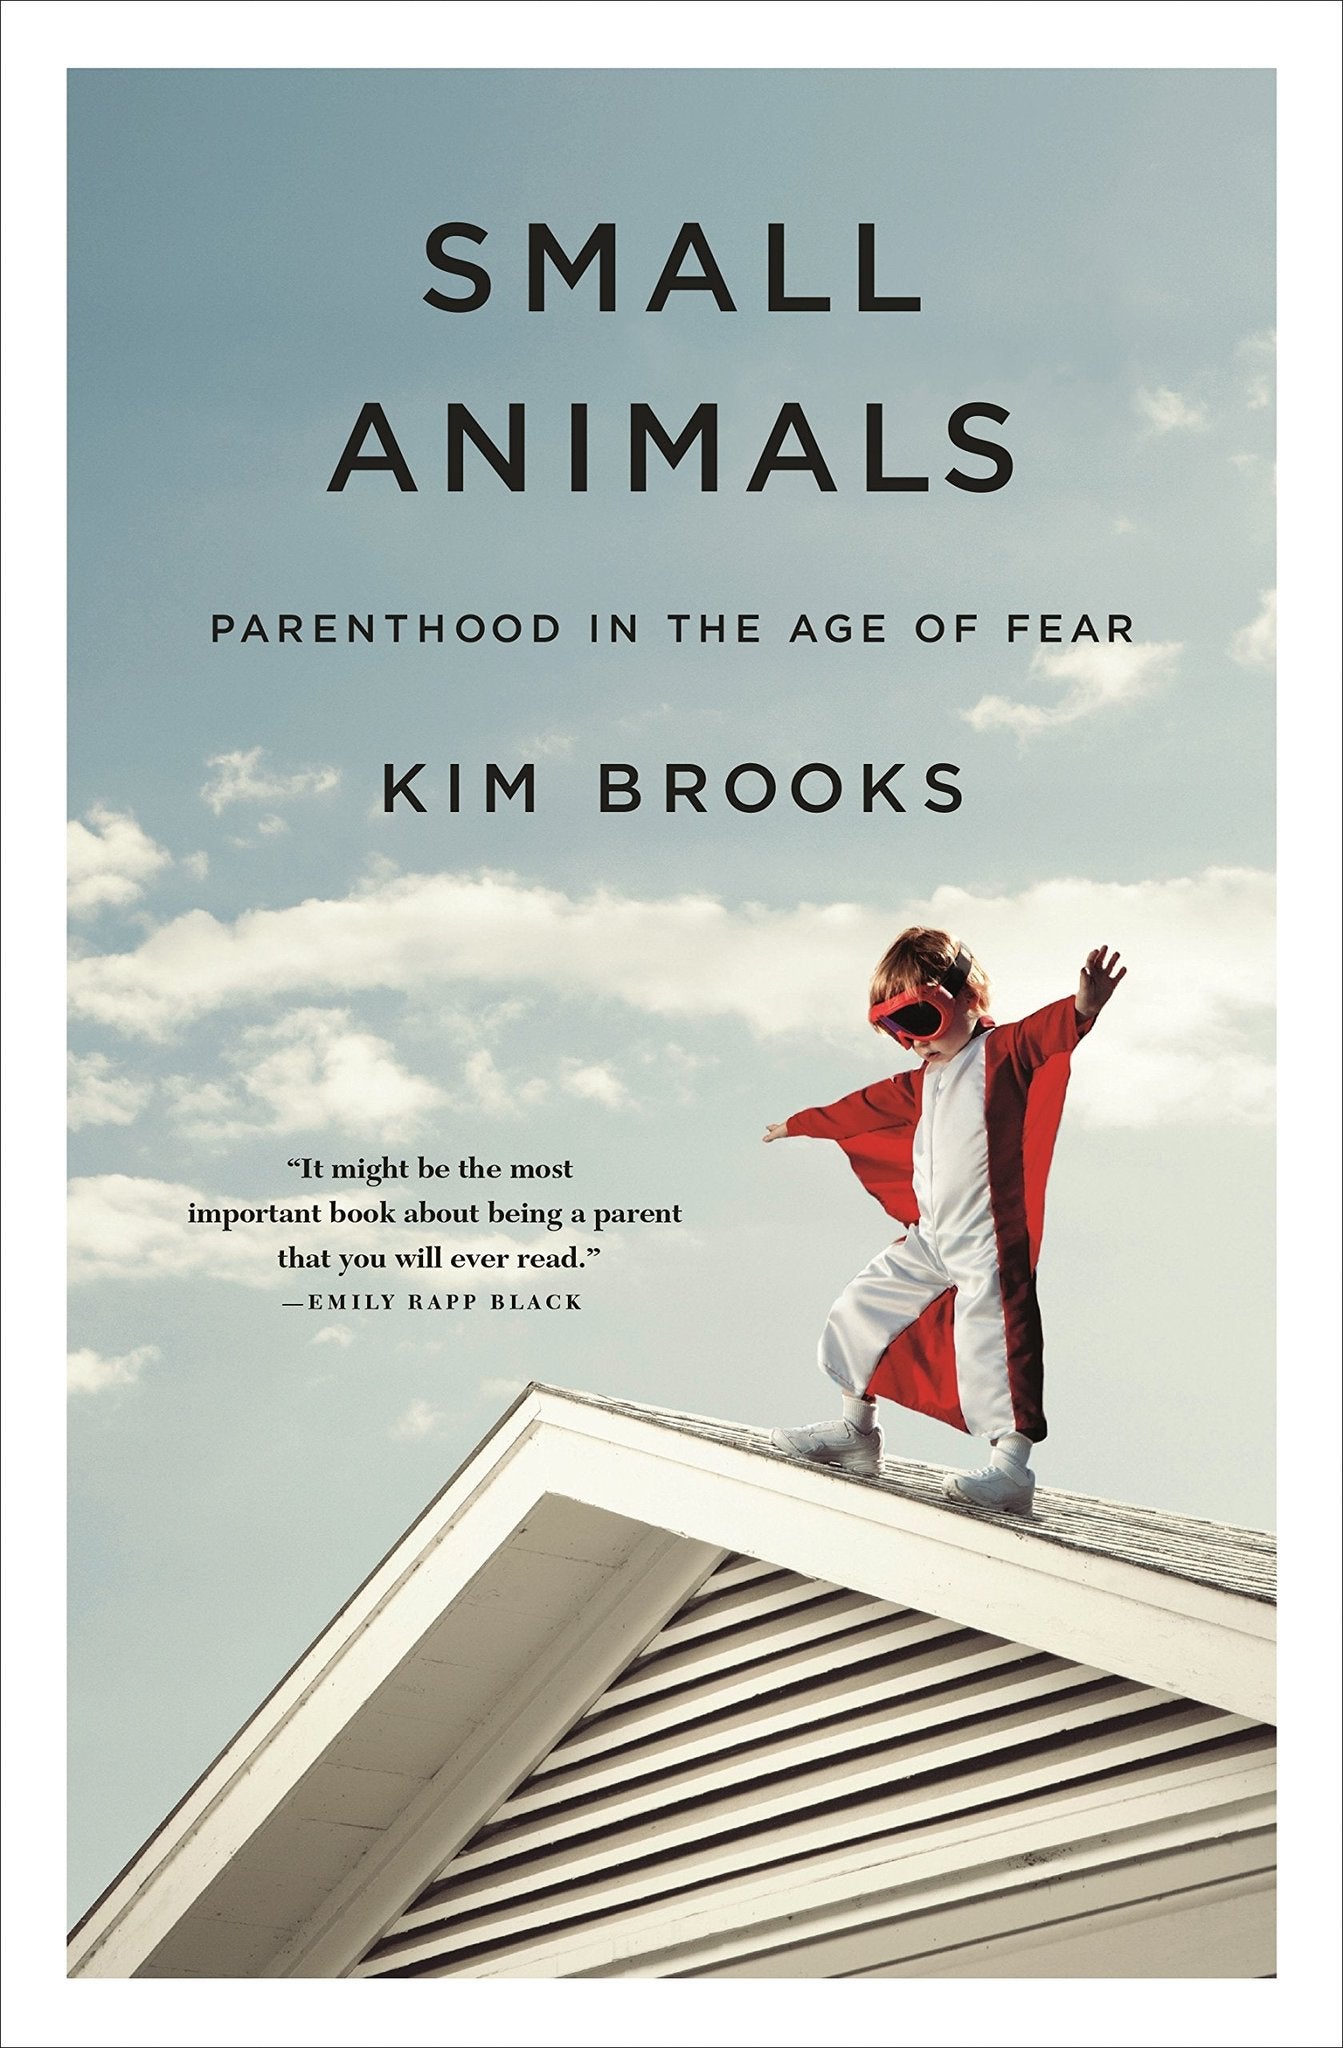 Small Animals by Kim Brooks